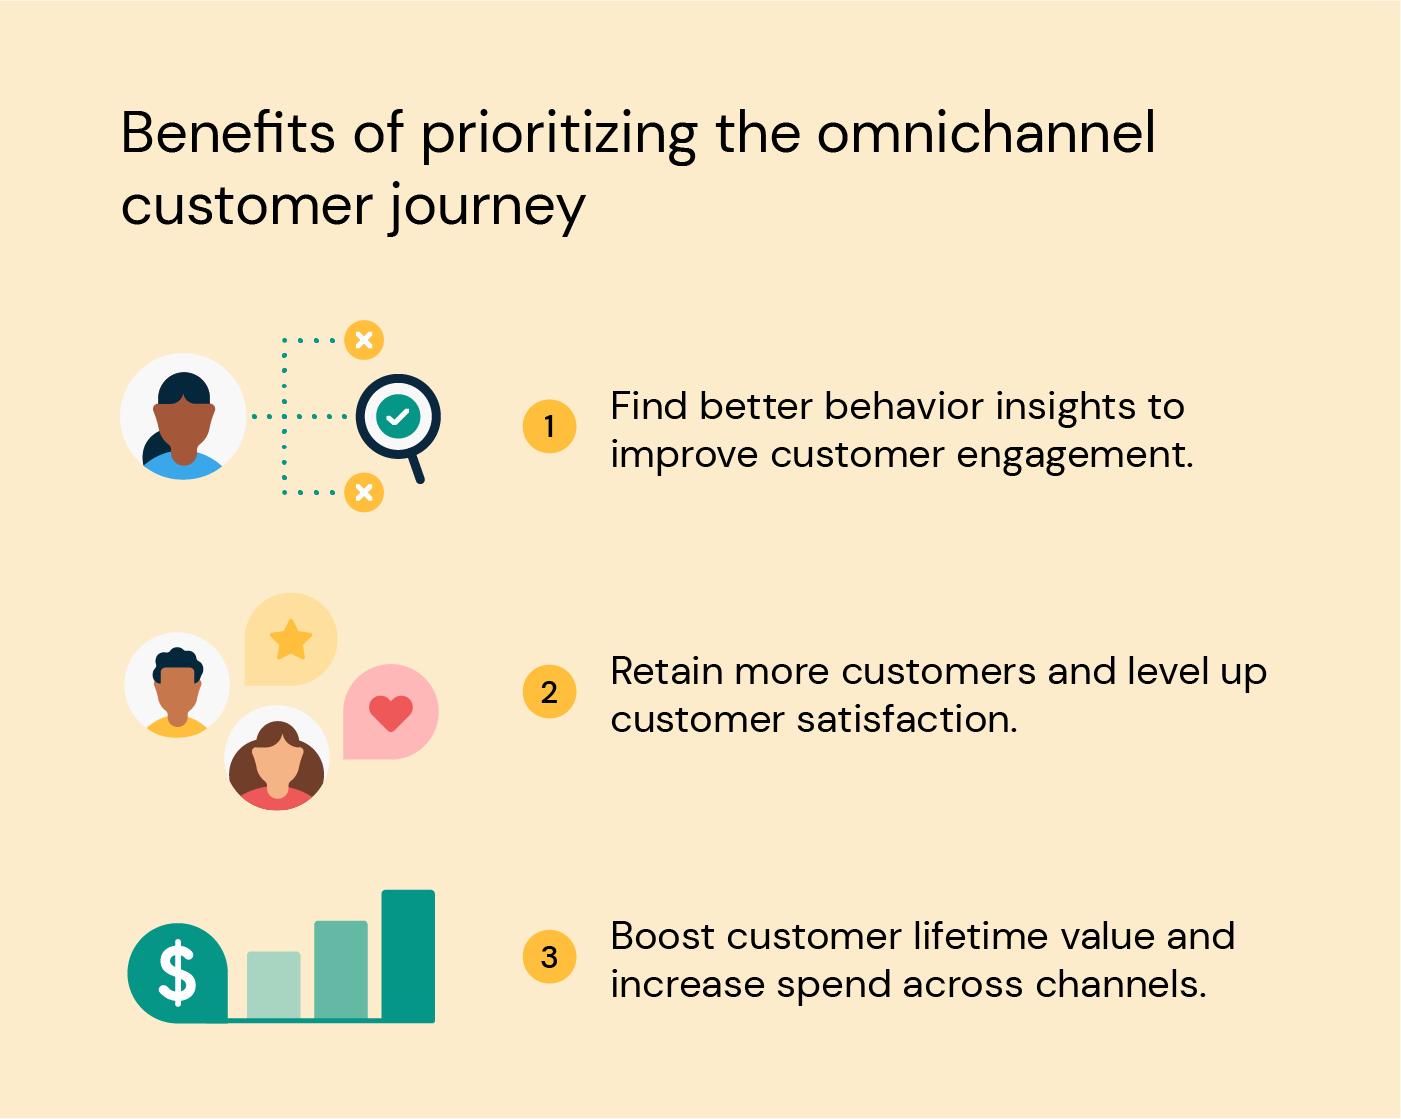 Image showing the omnichannel customer journey benefits